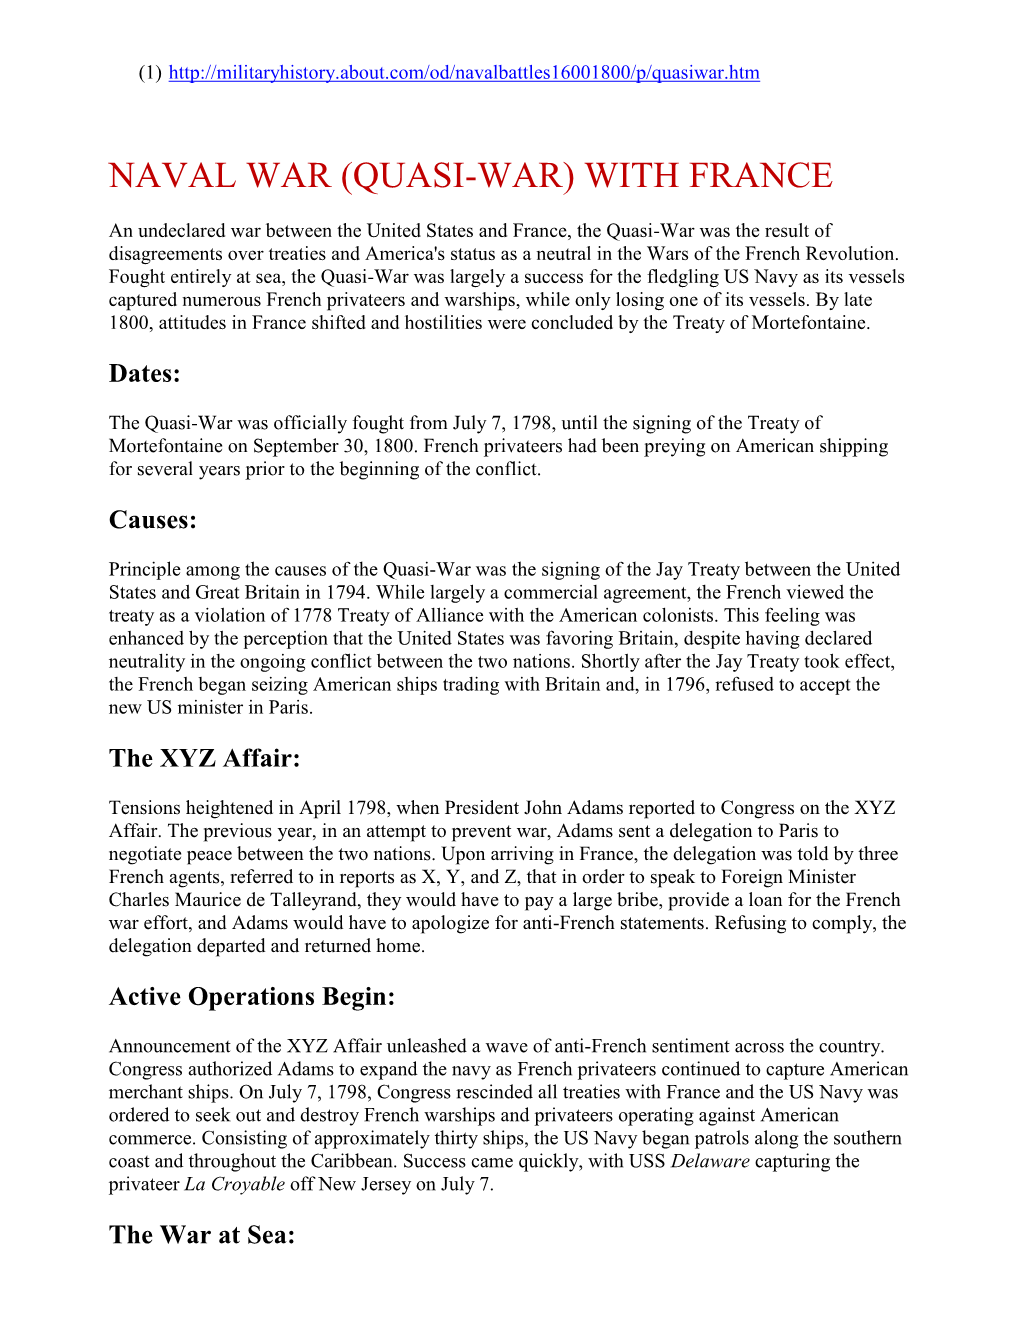 Naval War (Quasi-War) with France